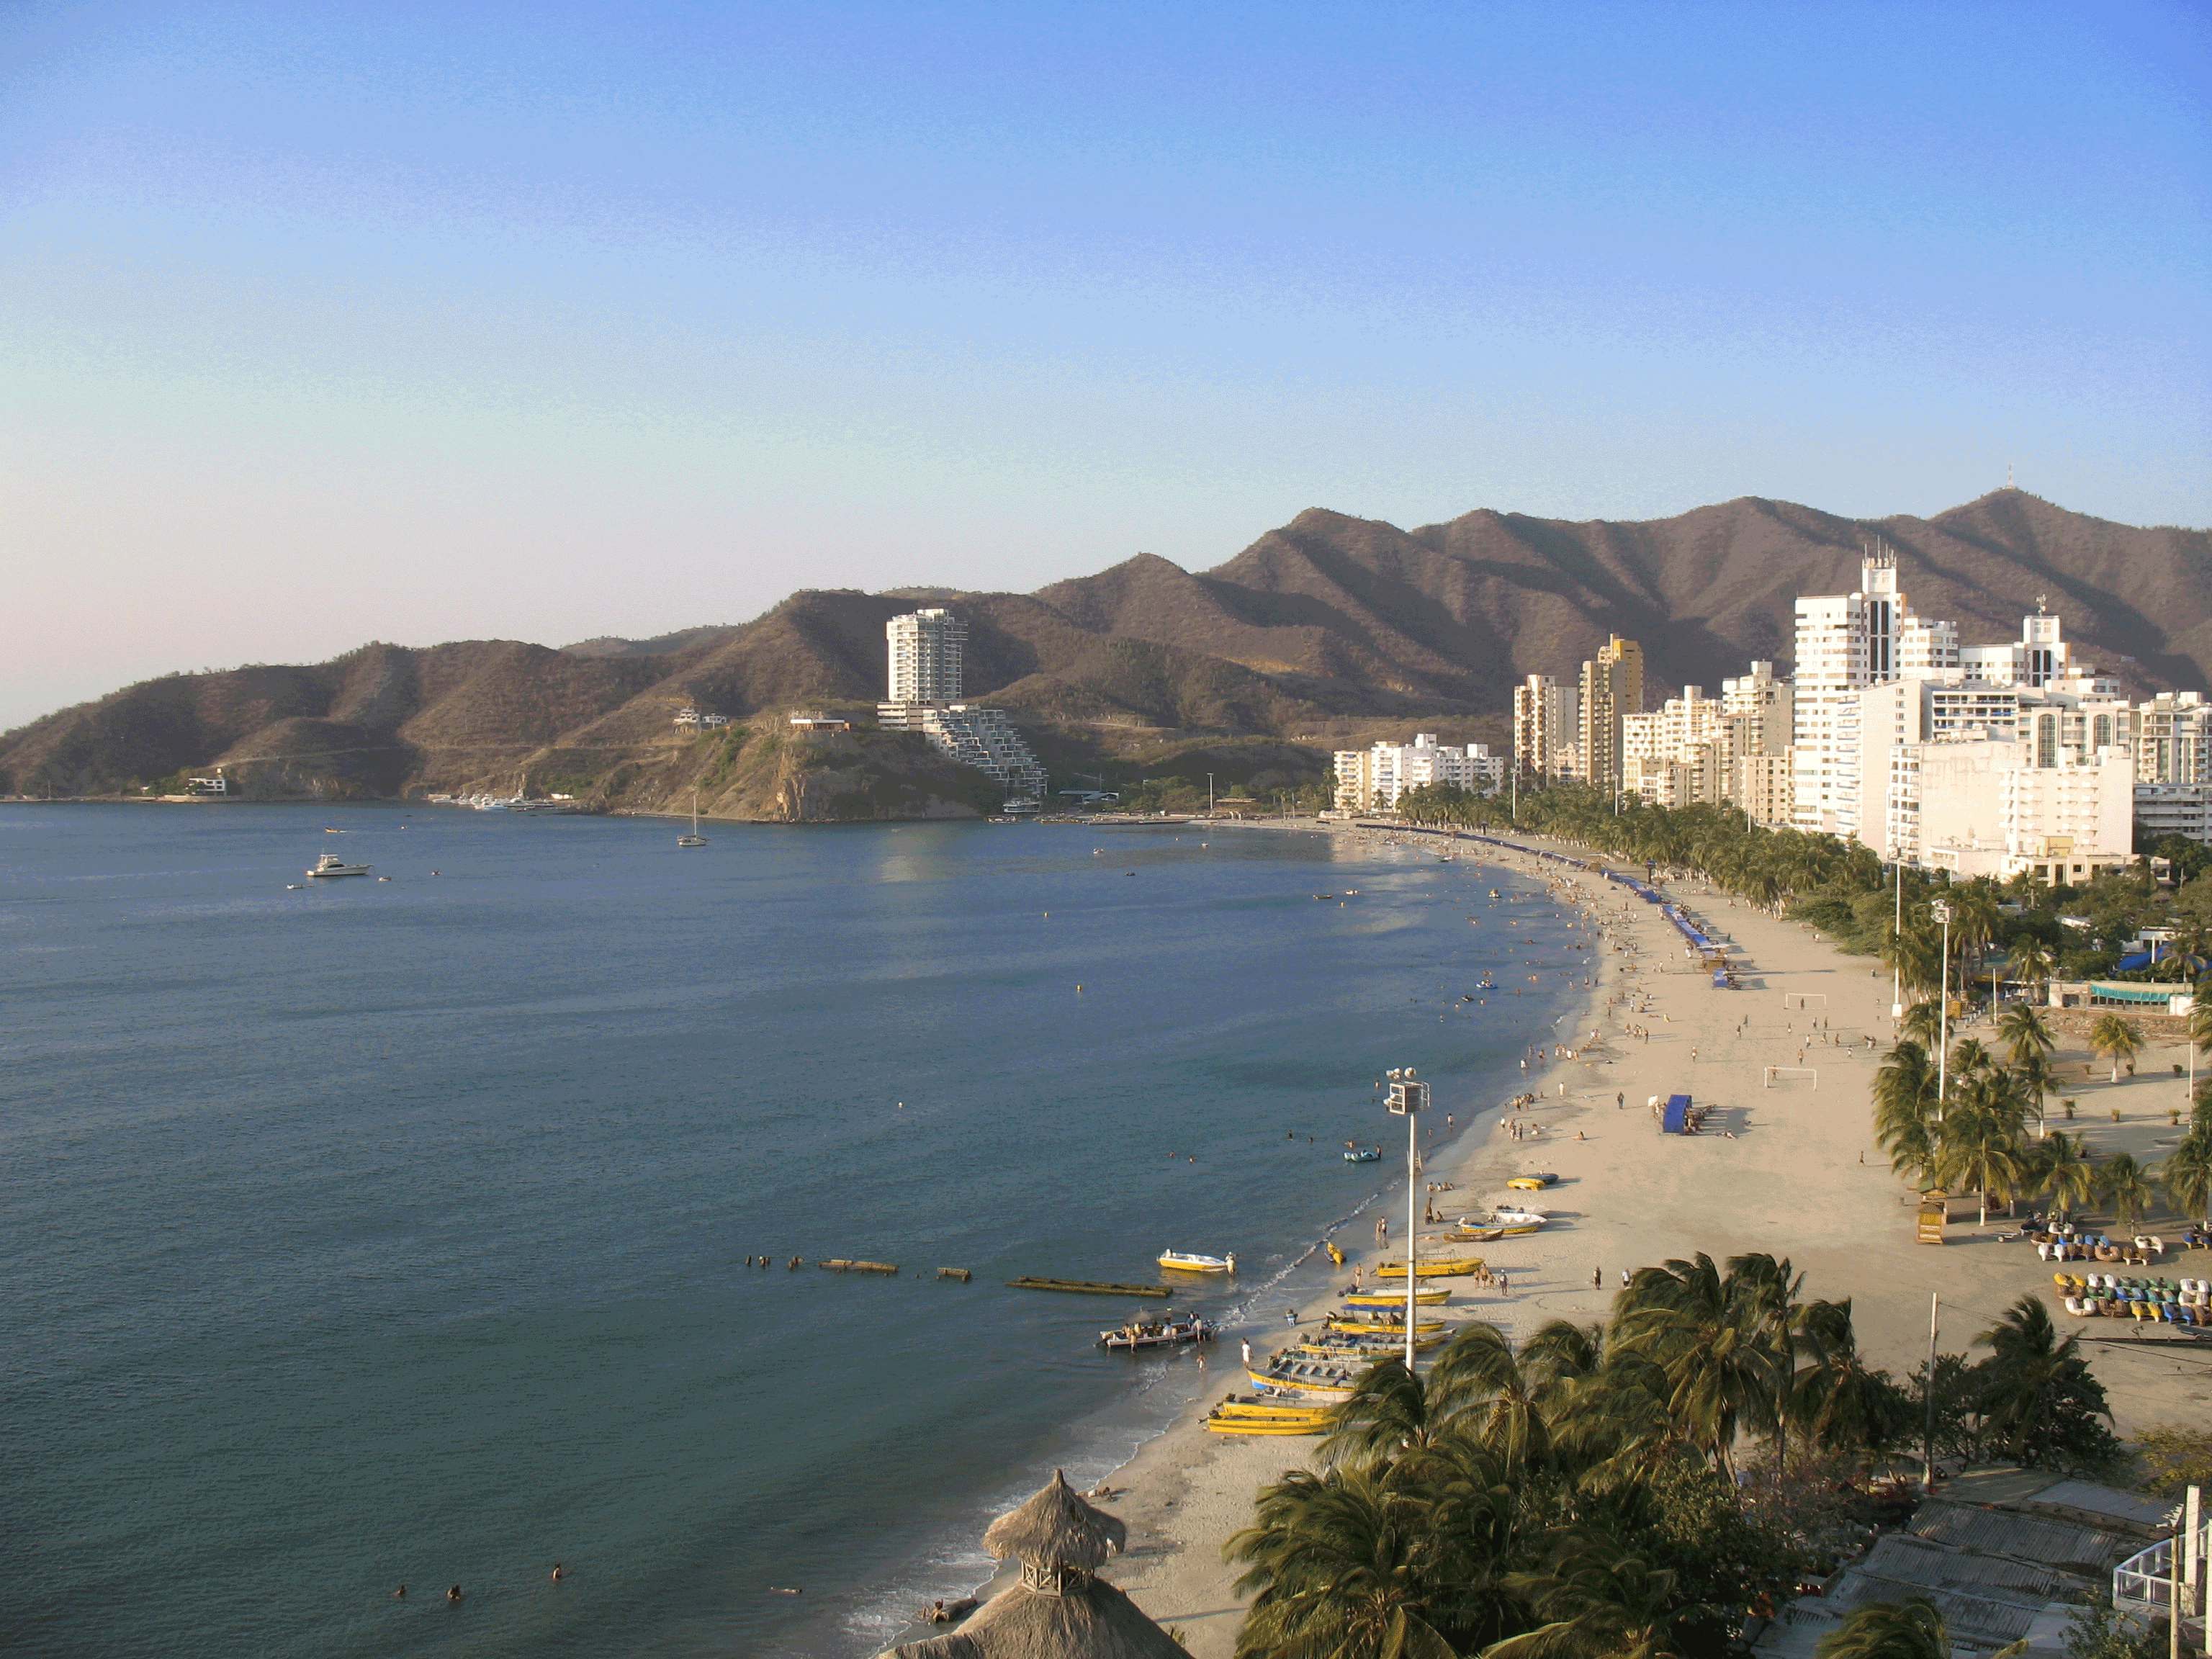 A view of the cove and beach at El Rodadero